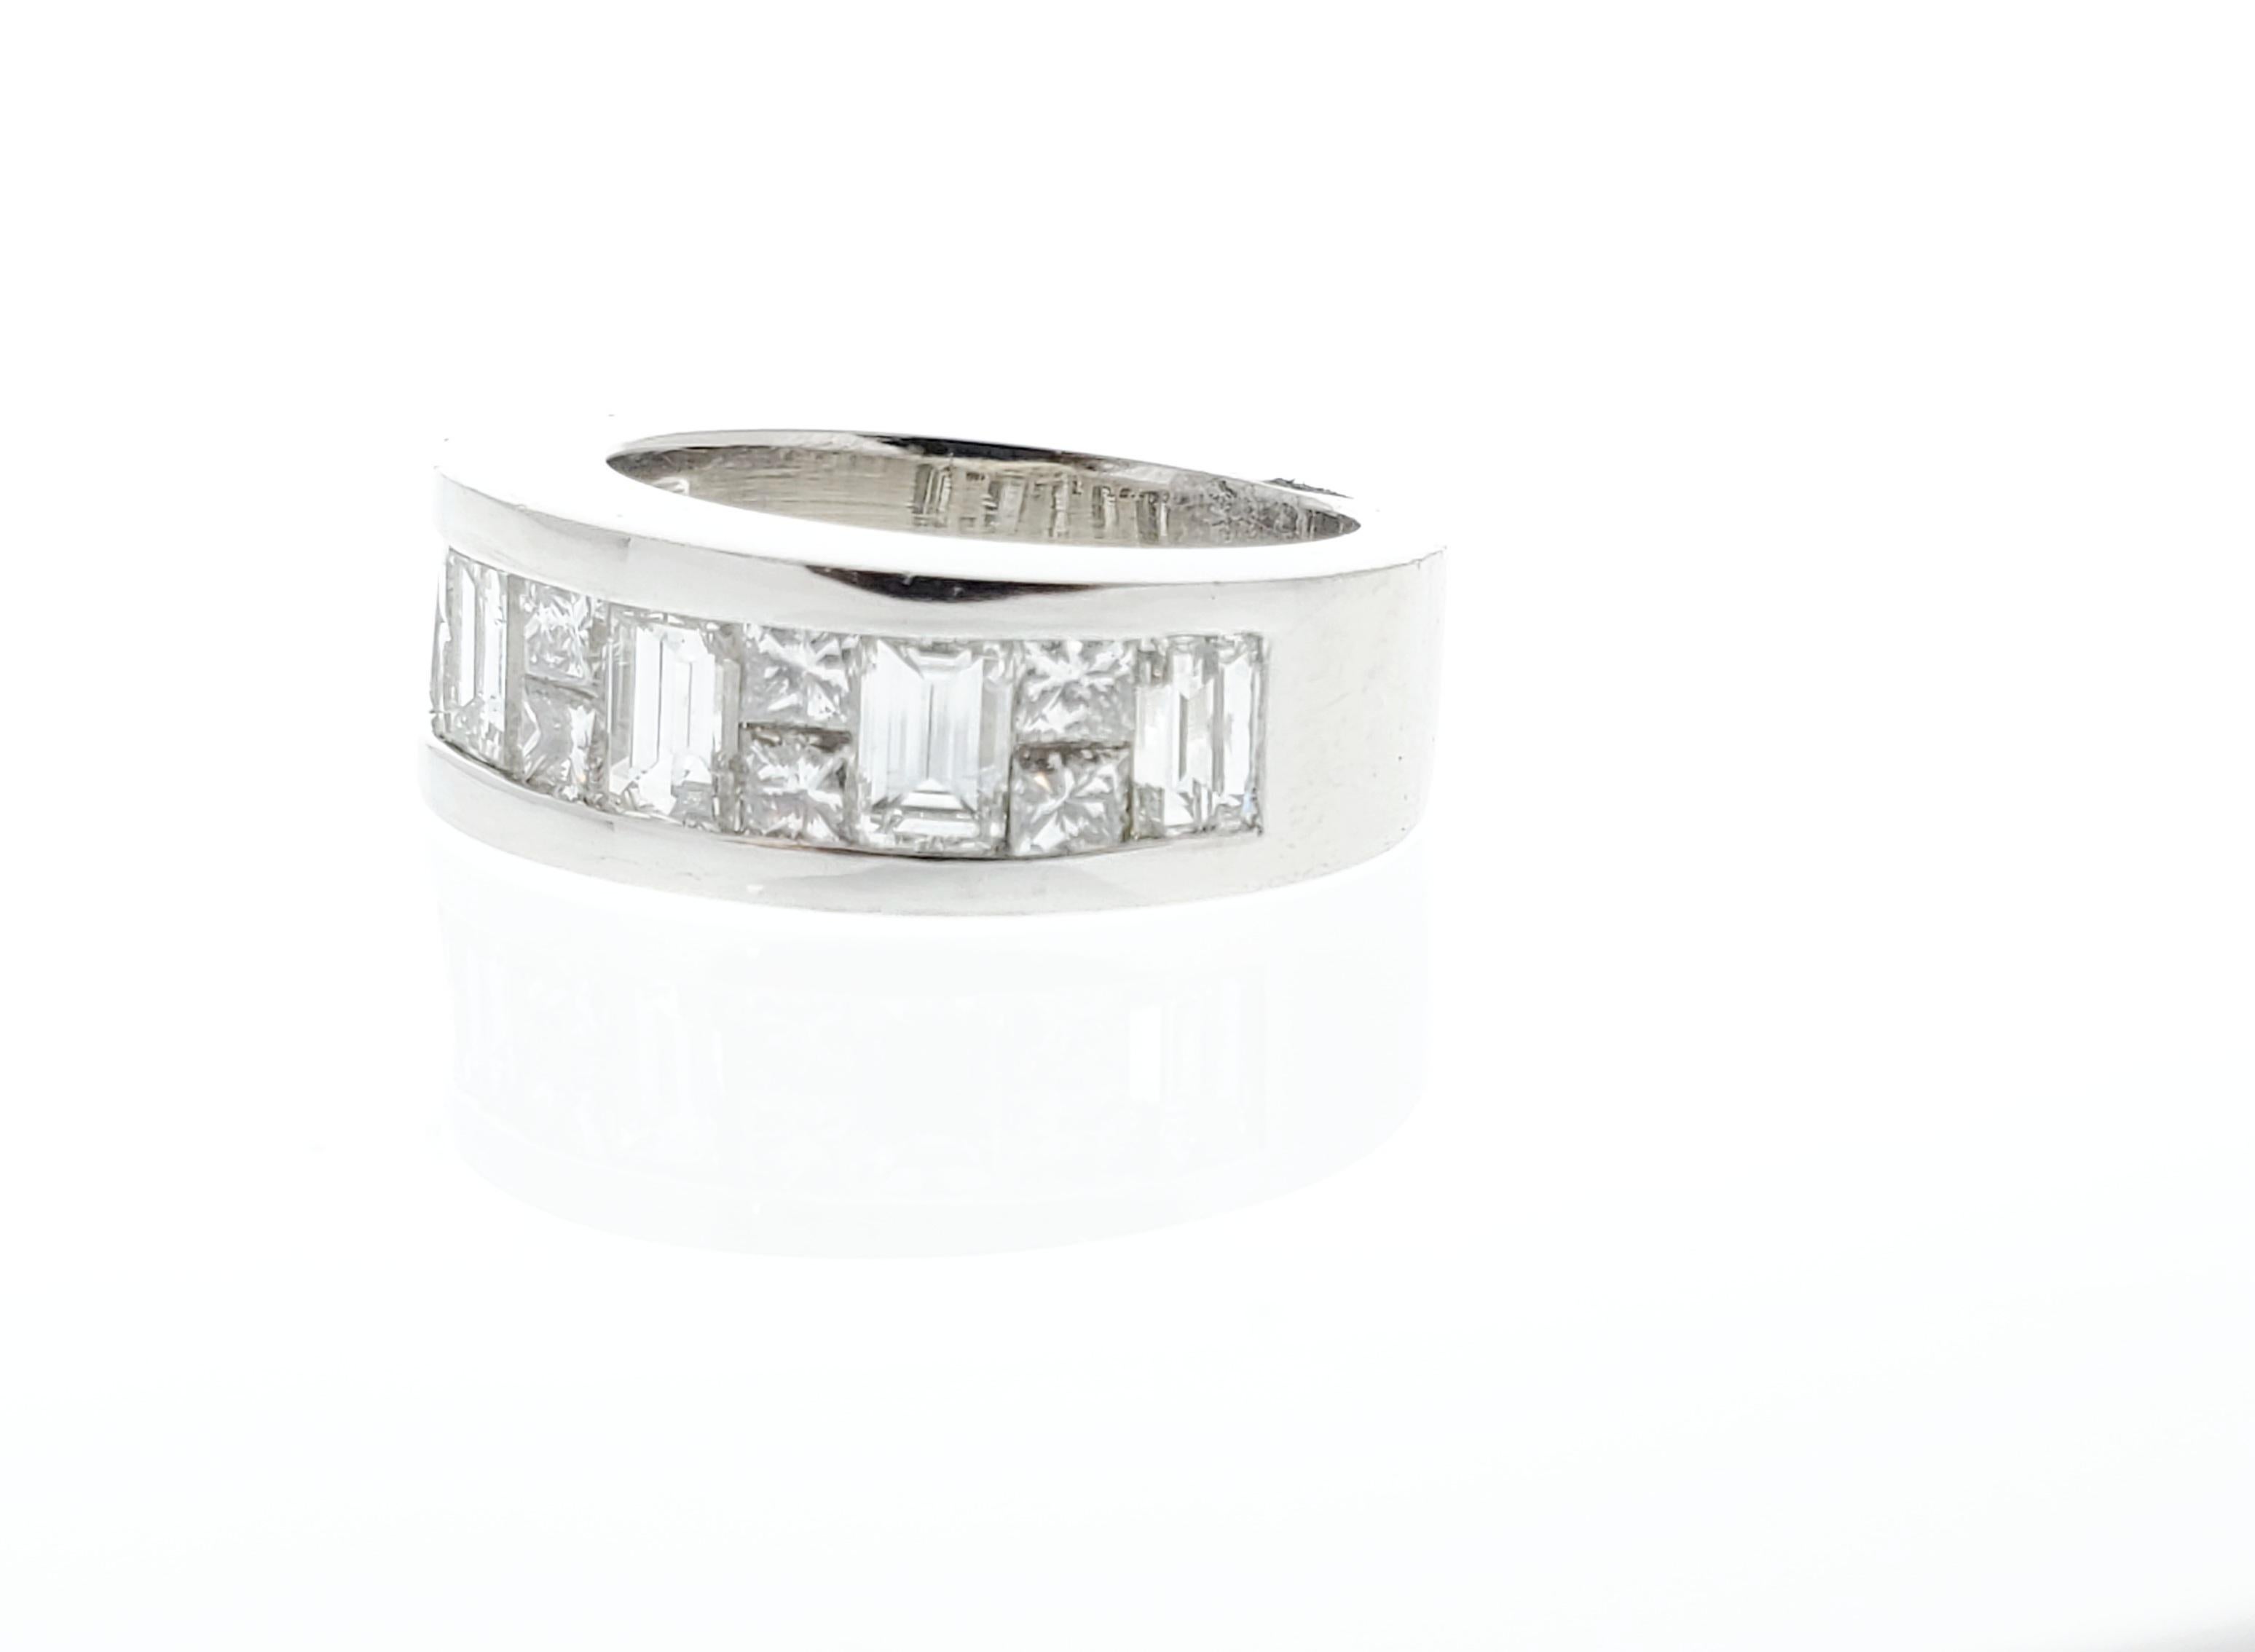 Contemporary 2.27 Carat Princess Cut and Baguette White Diamond Ring in Platinum